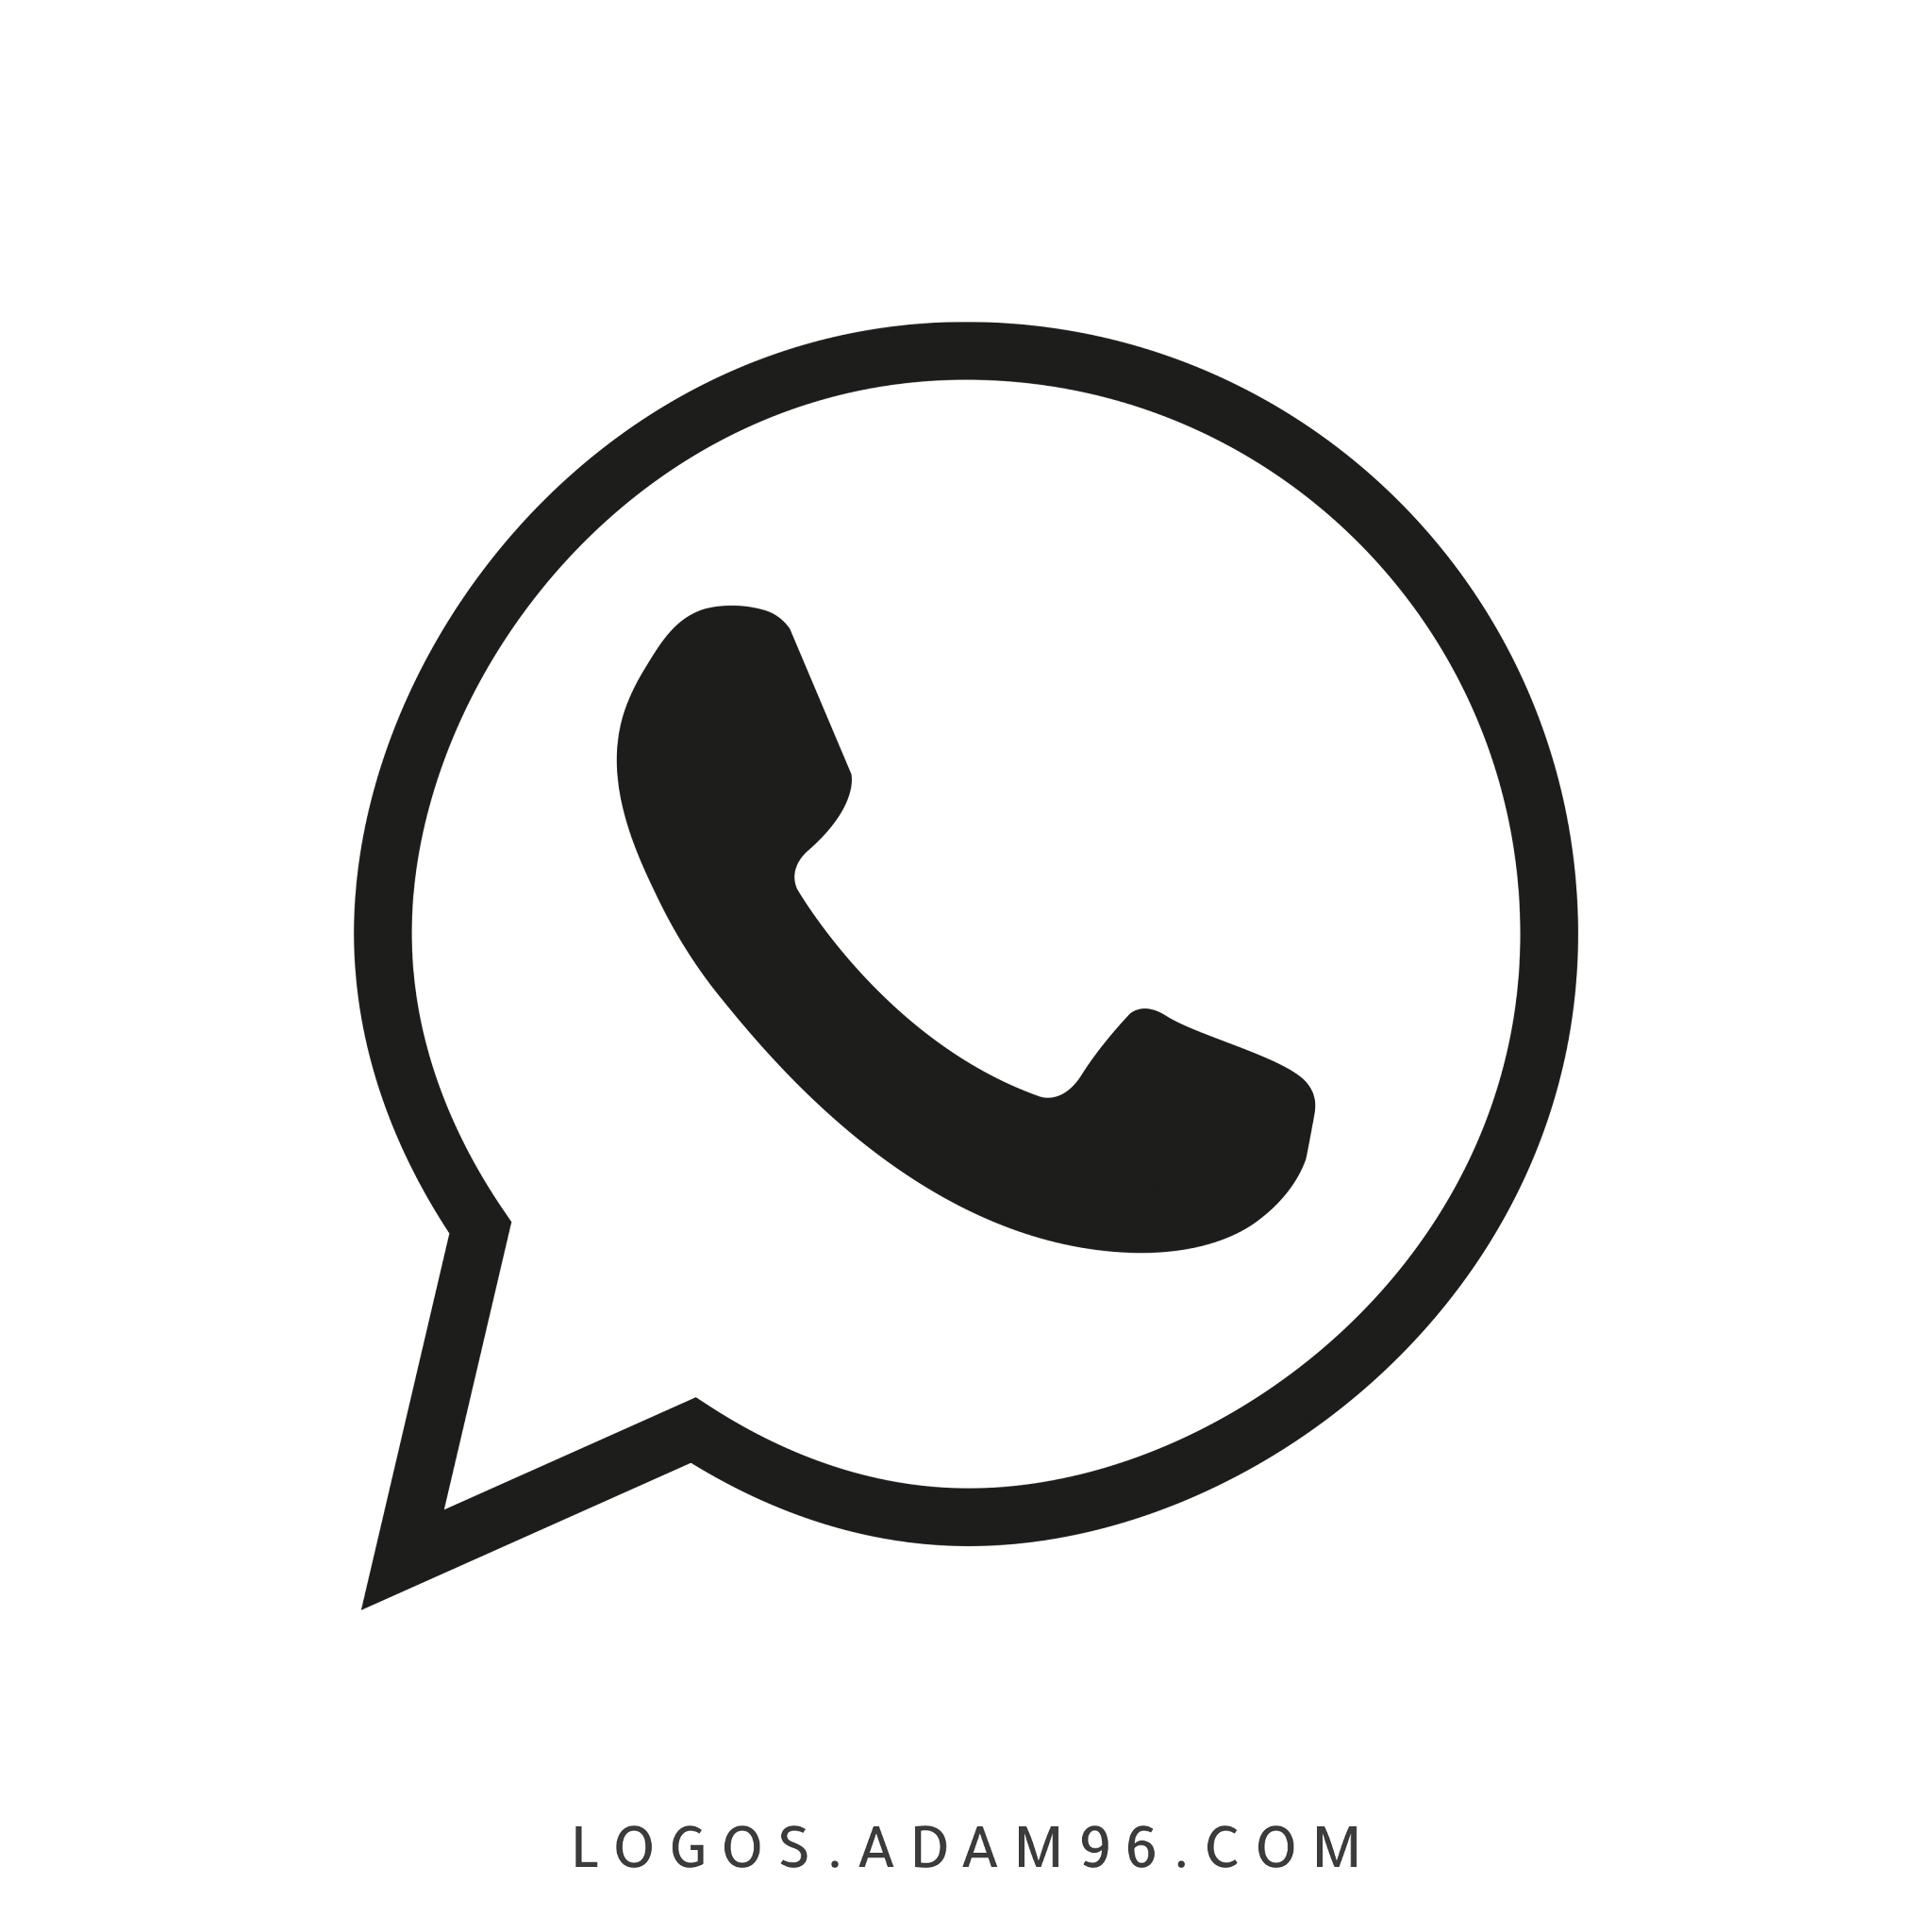 Whatsapp Logo Black and White transparent PNG - PDF